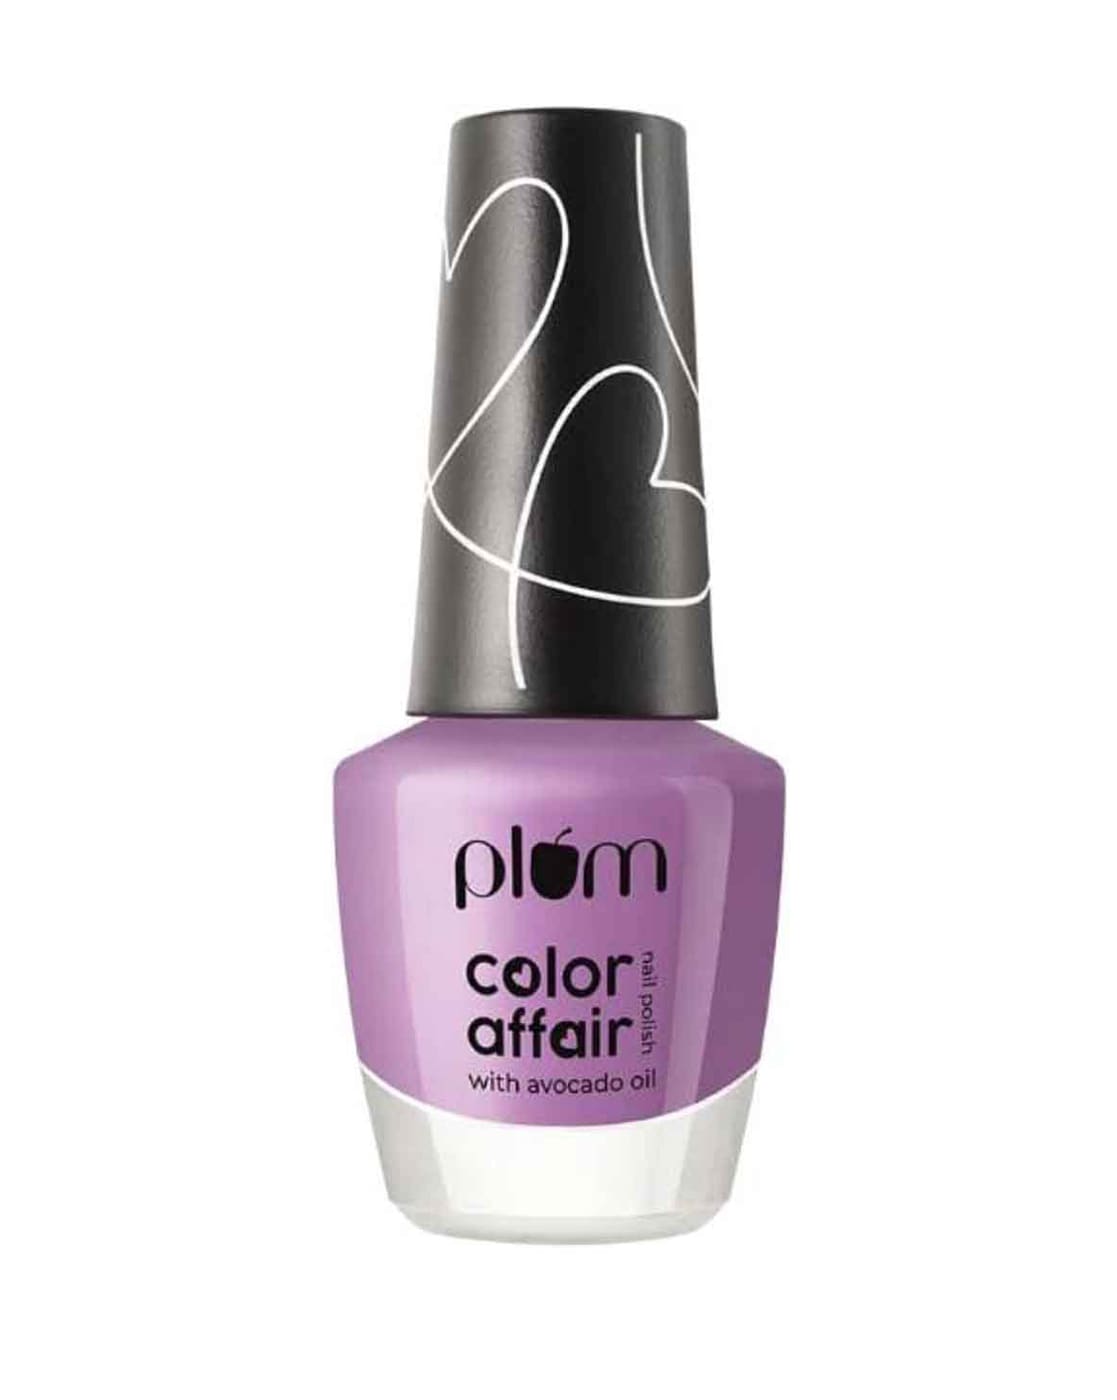 UR SUGAR Winter Thermal UV Gel Polish Purple Color Changing Glitter Nail  Varnish | eBay